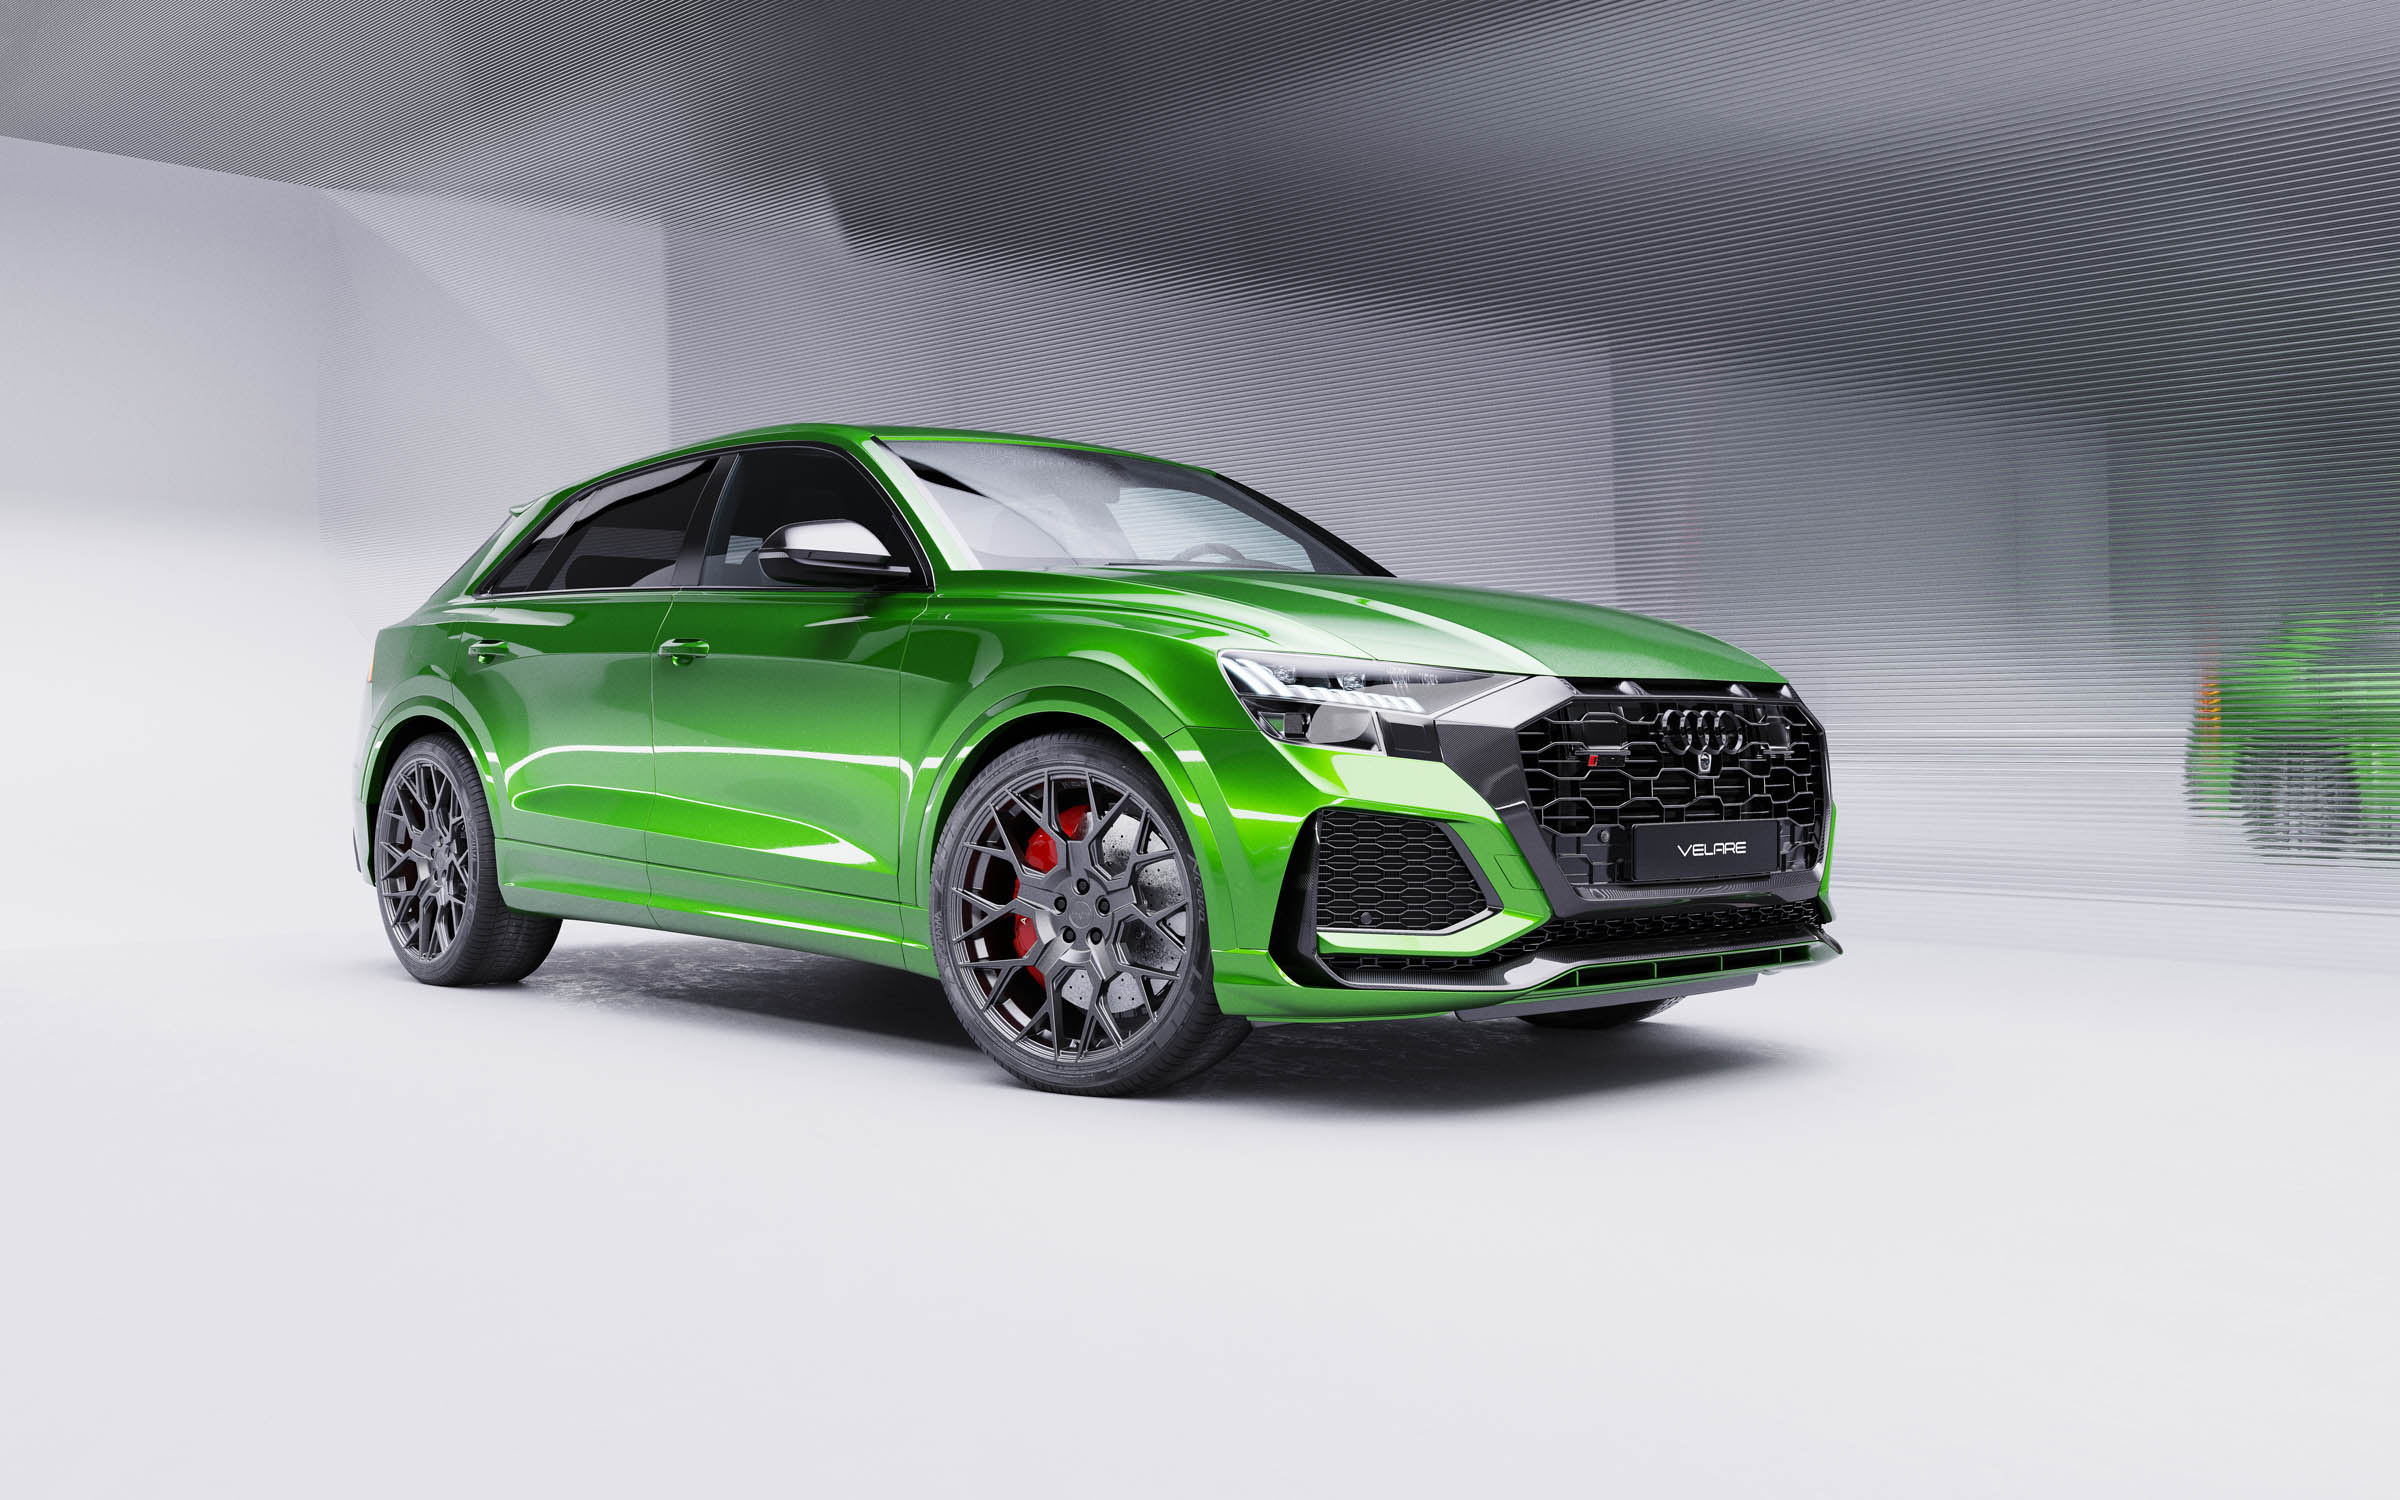 Audi Q8 RS 2020 Green Matt Graphite Velare VLR02 Wipdesigns 3D CGI Visualisation 21